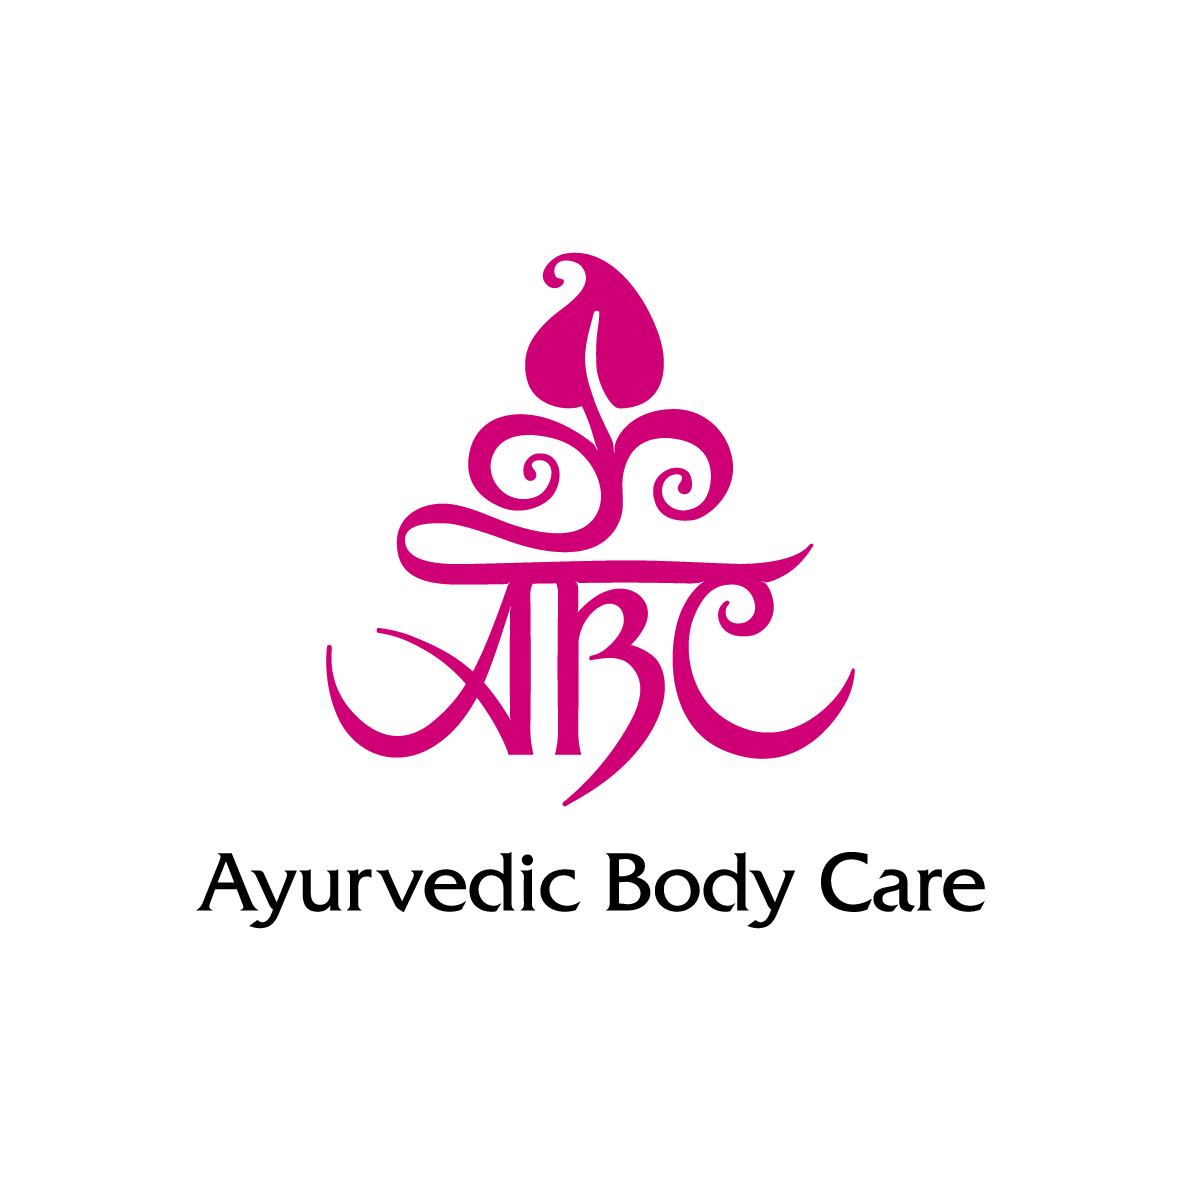 Ayurvedic Body Care